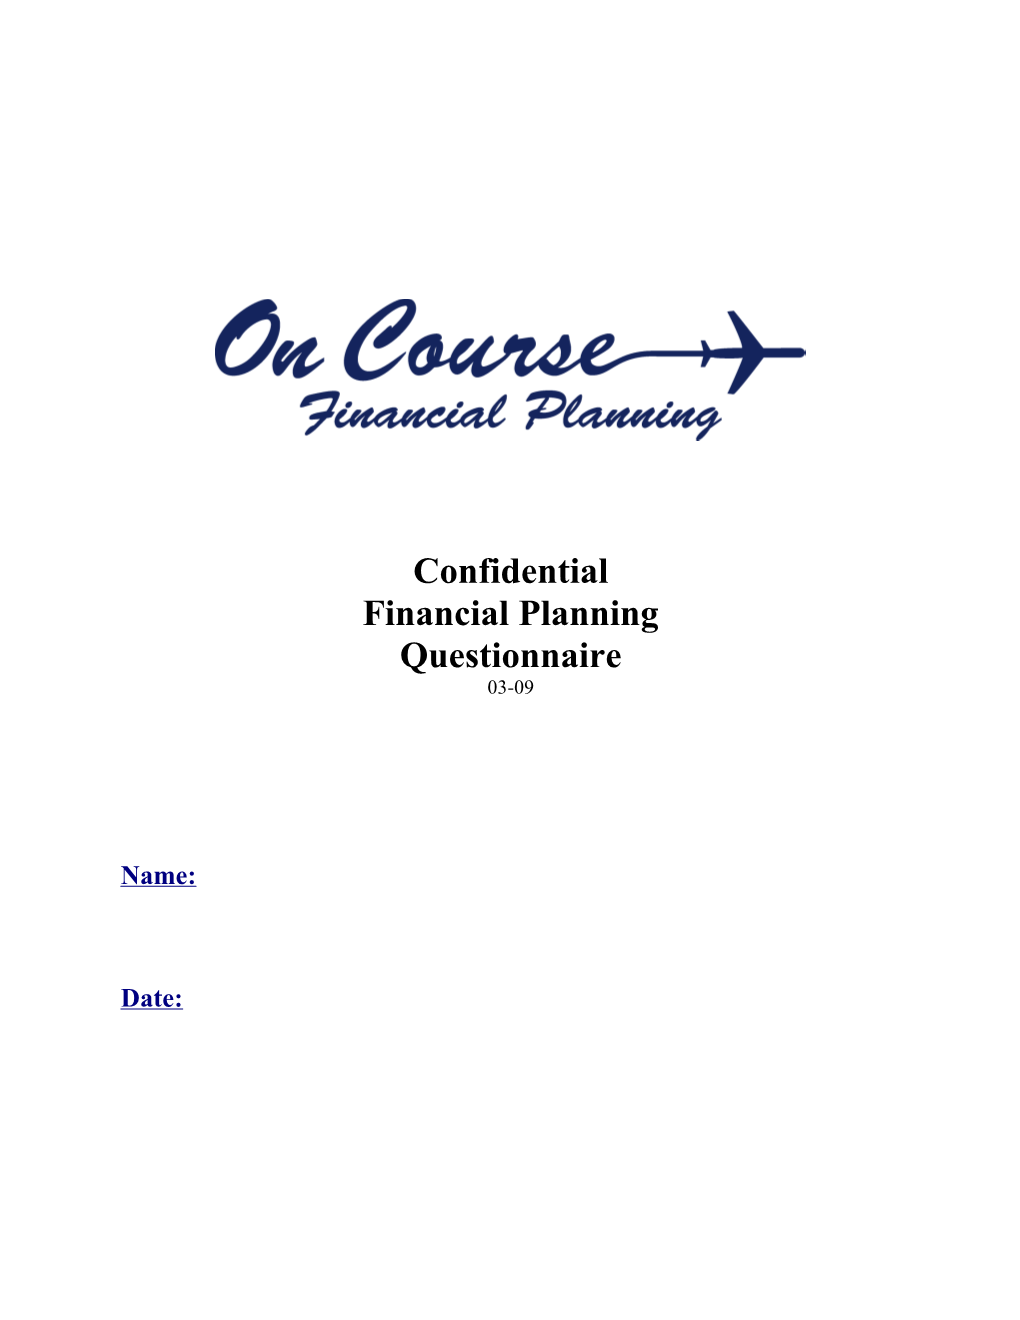 Confidential Financial Planning Questionnaire